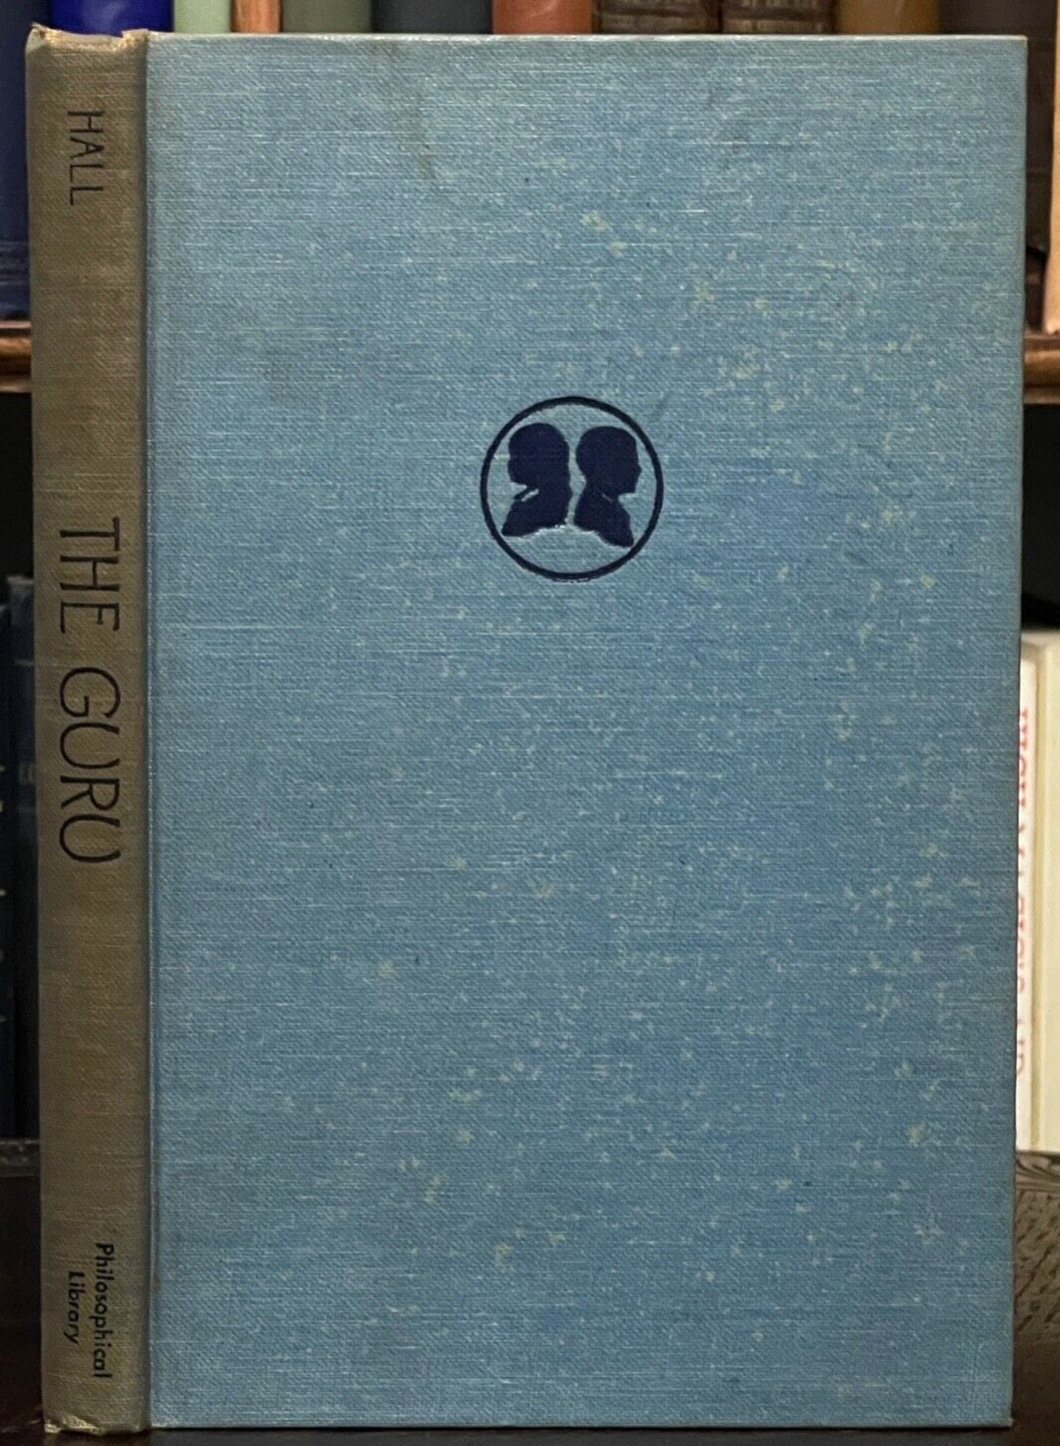 THE GURU BY HIS DISCIPLE - MANLY P. HALL, 1958 - INDIA, HINDU MYSTICISM SPIRIT